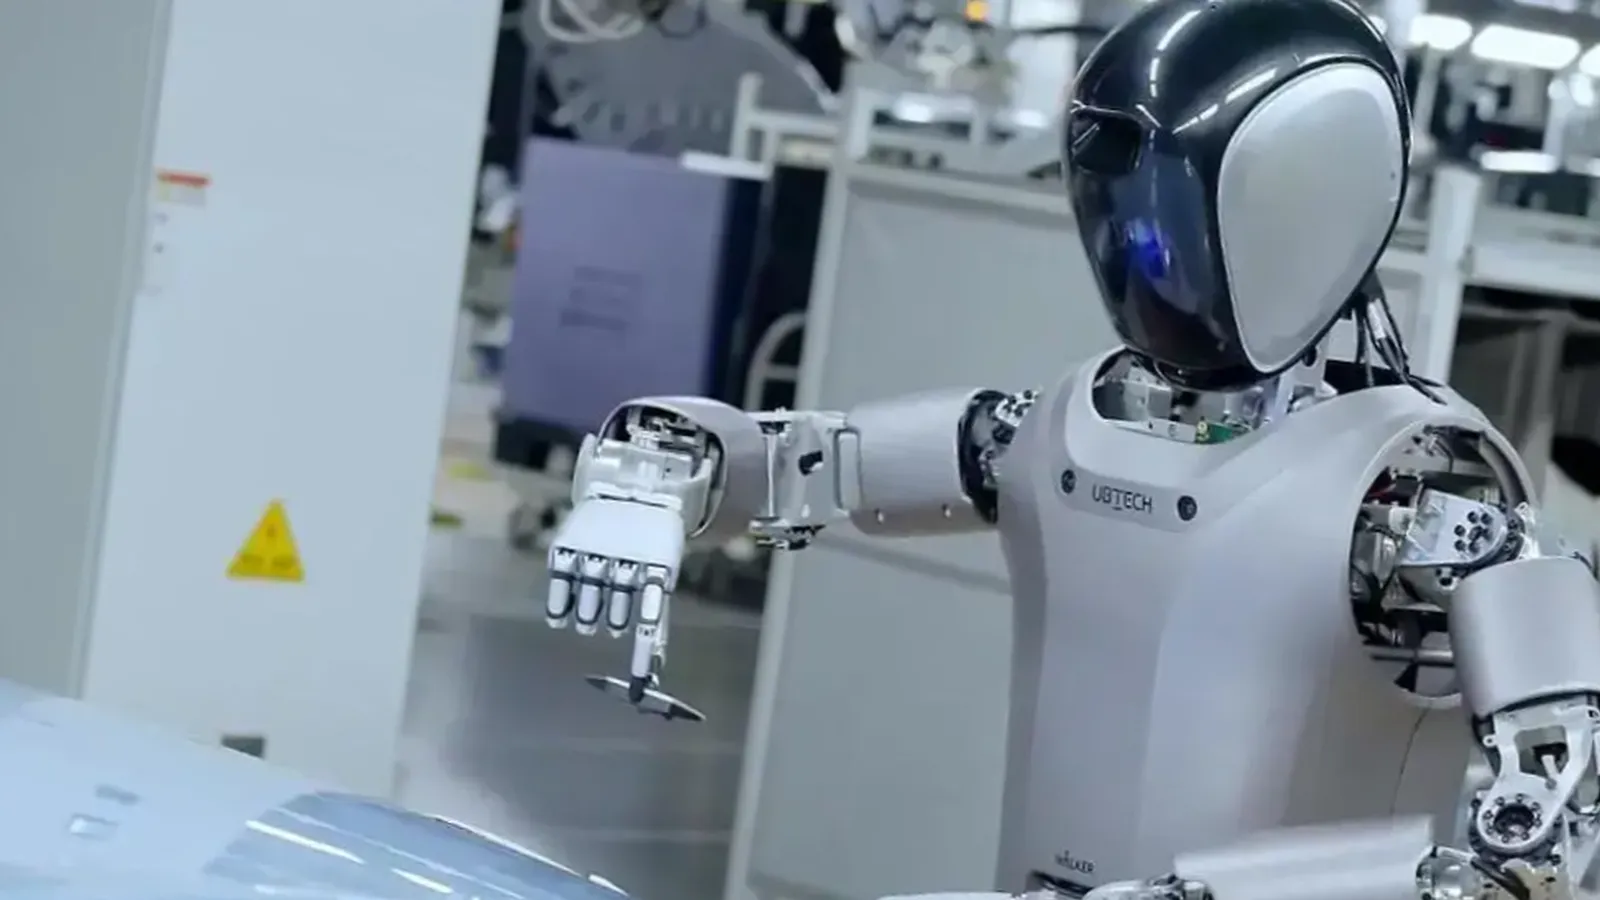 Robot Manusia Bantu Pabrik Mobil Listrik NIO - photo source: electrek - pibitek.biz - China